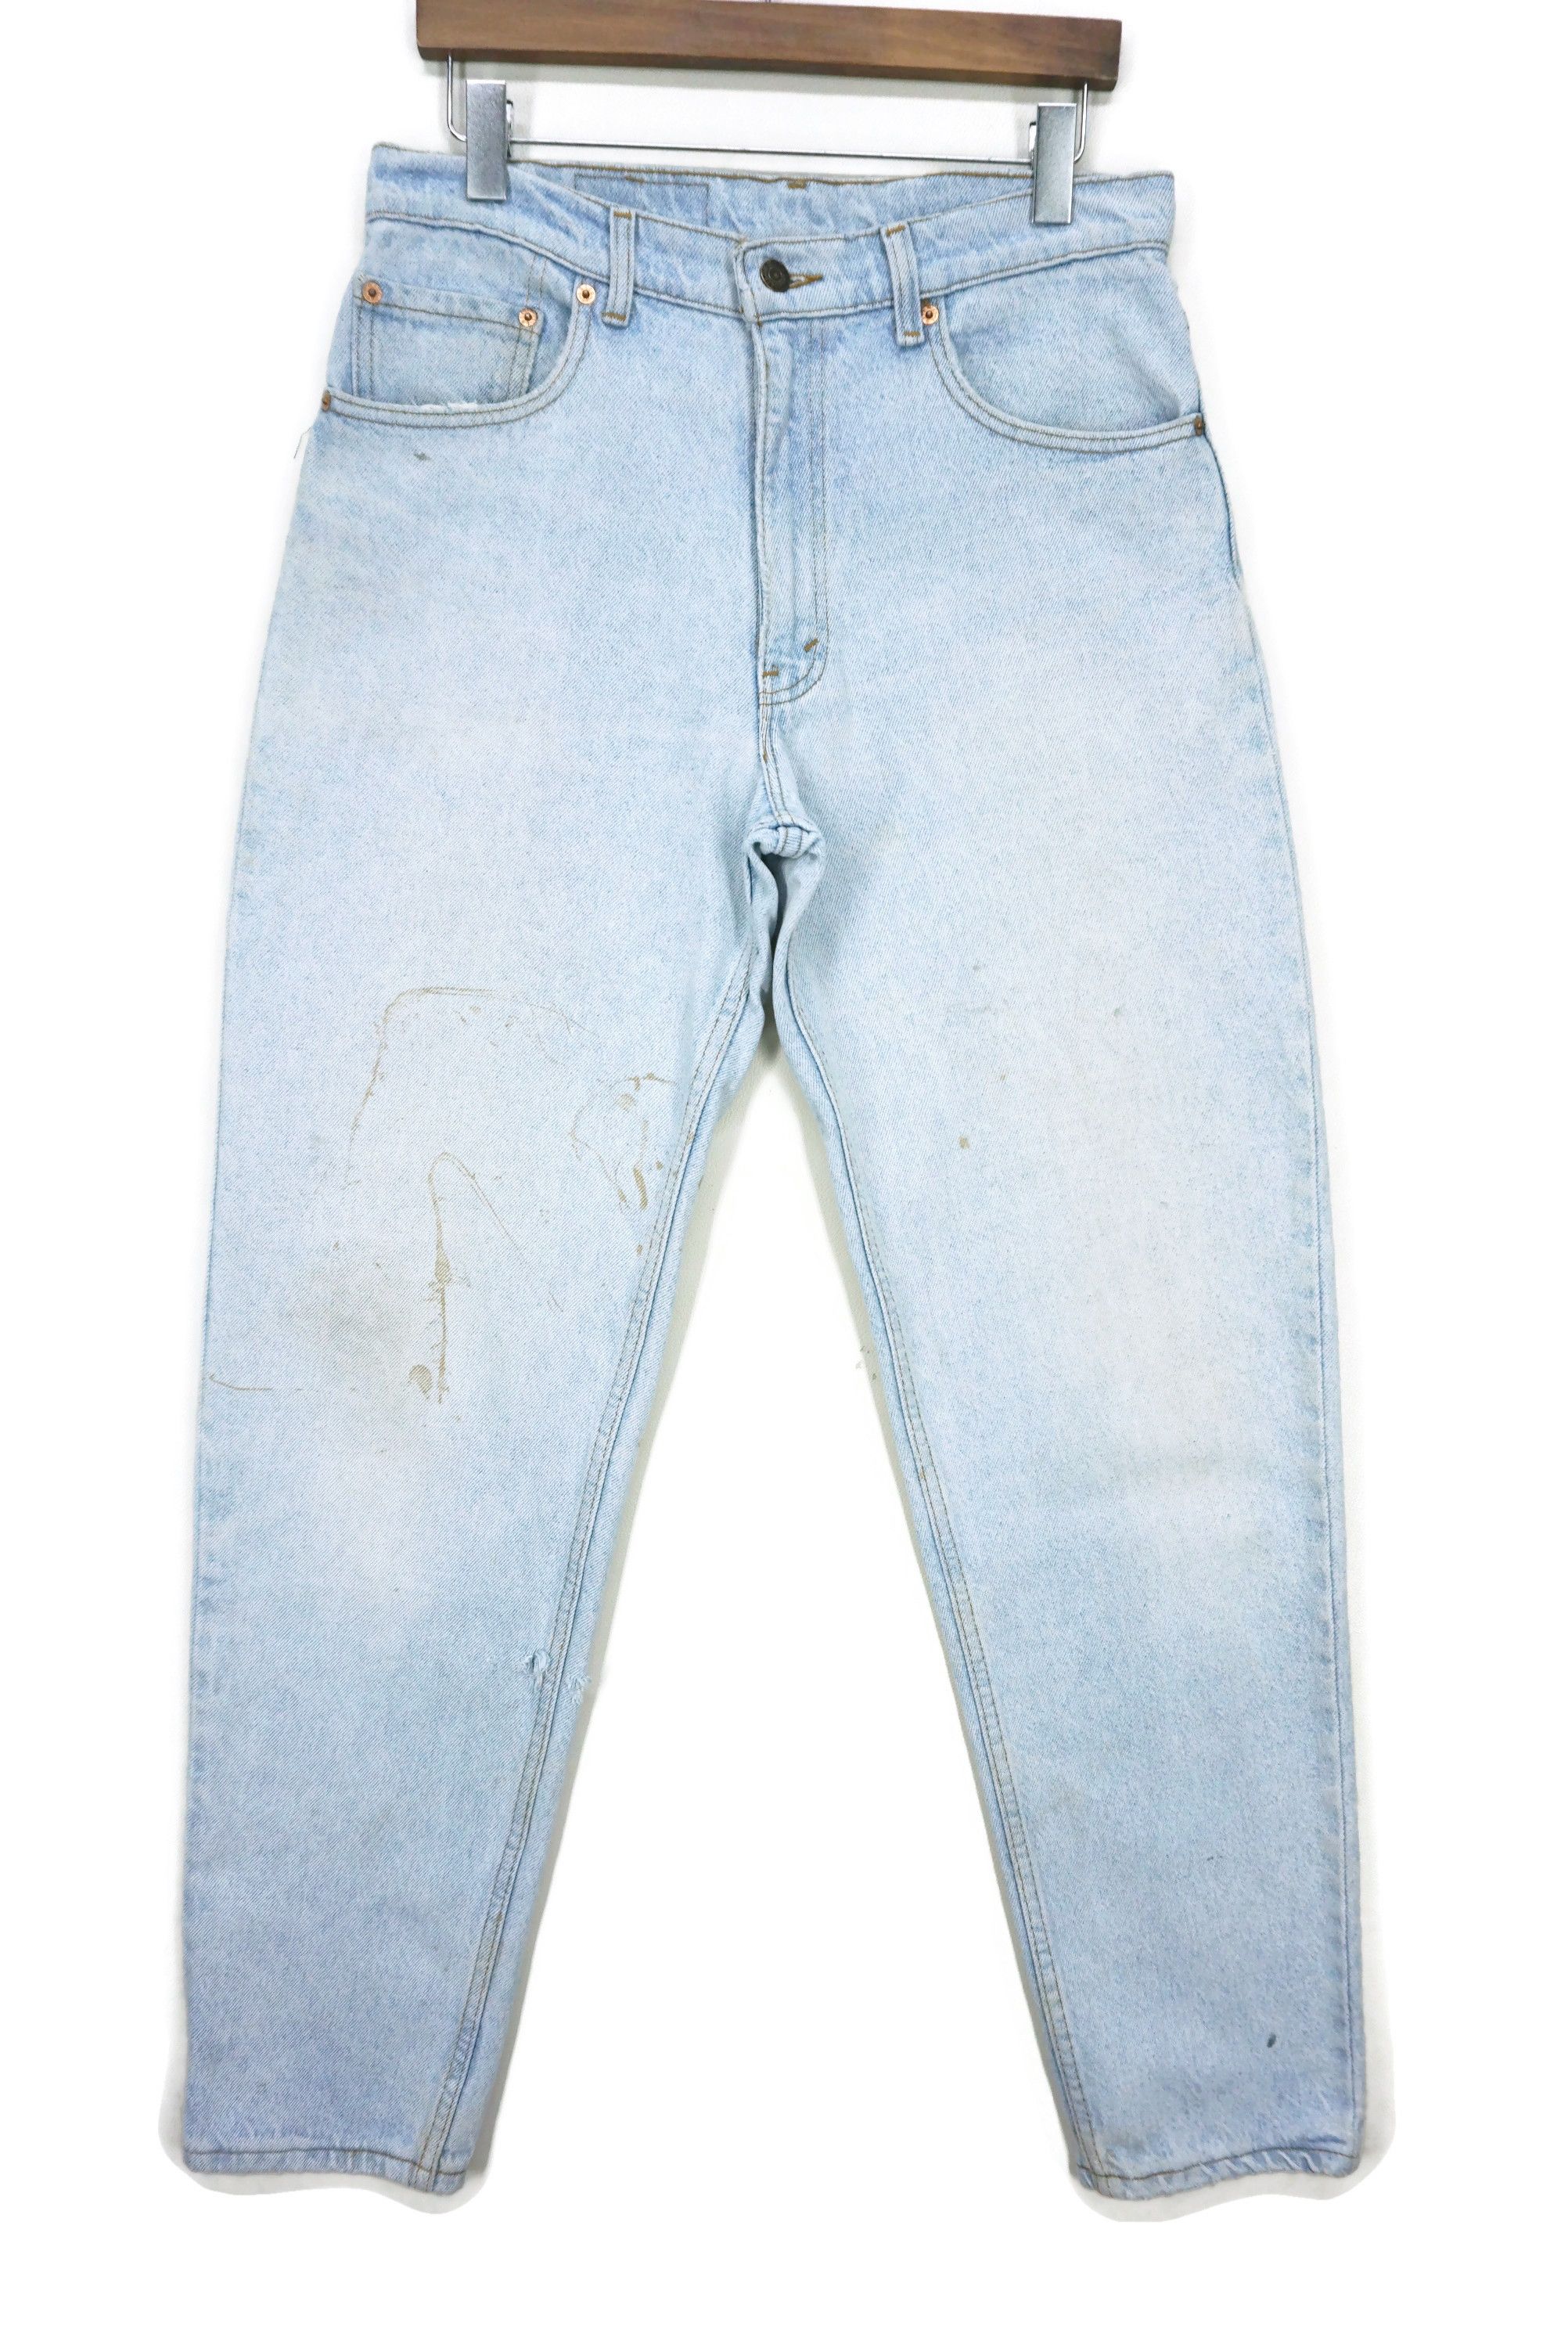 Vintage 90s Levis 550-4834 Vintage Dirty Blue Jeans Pants USA Made ...